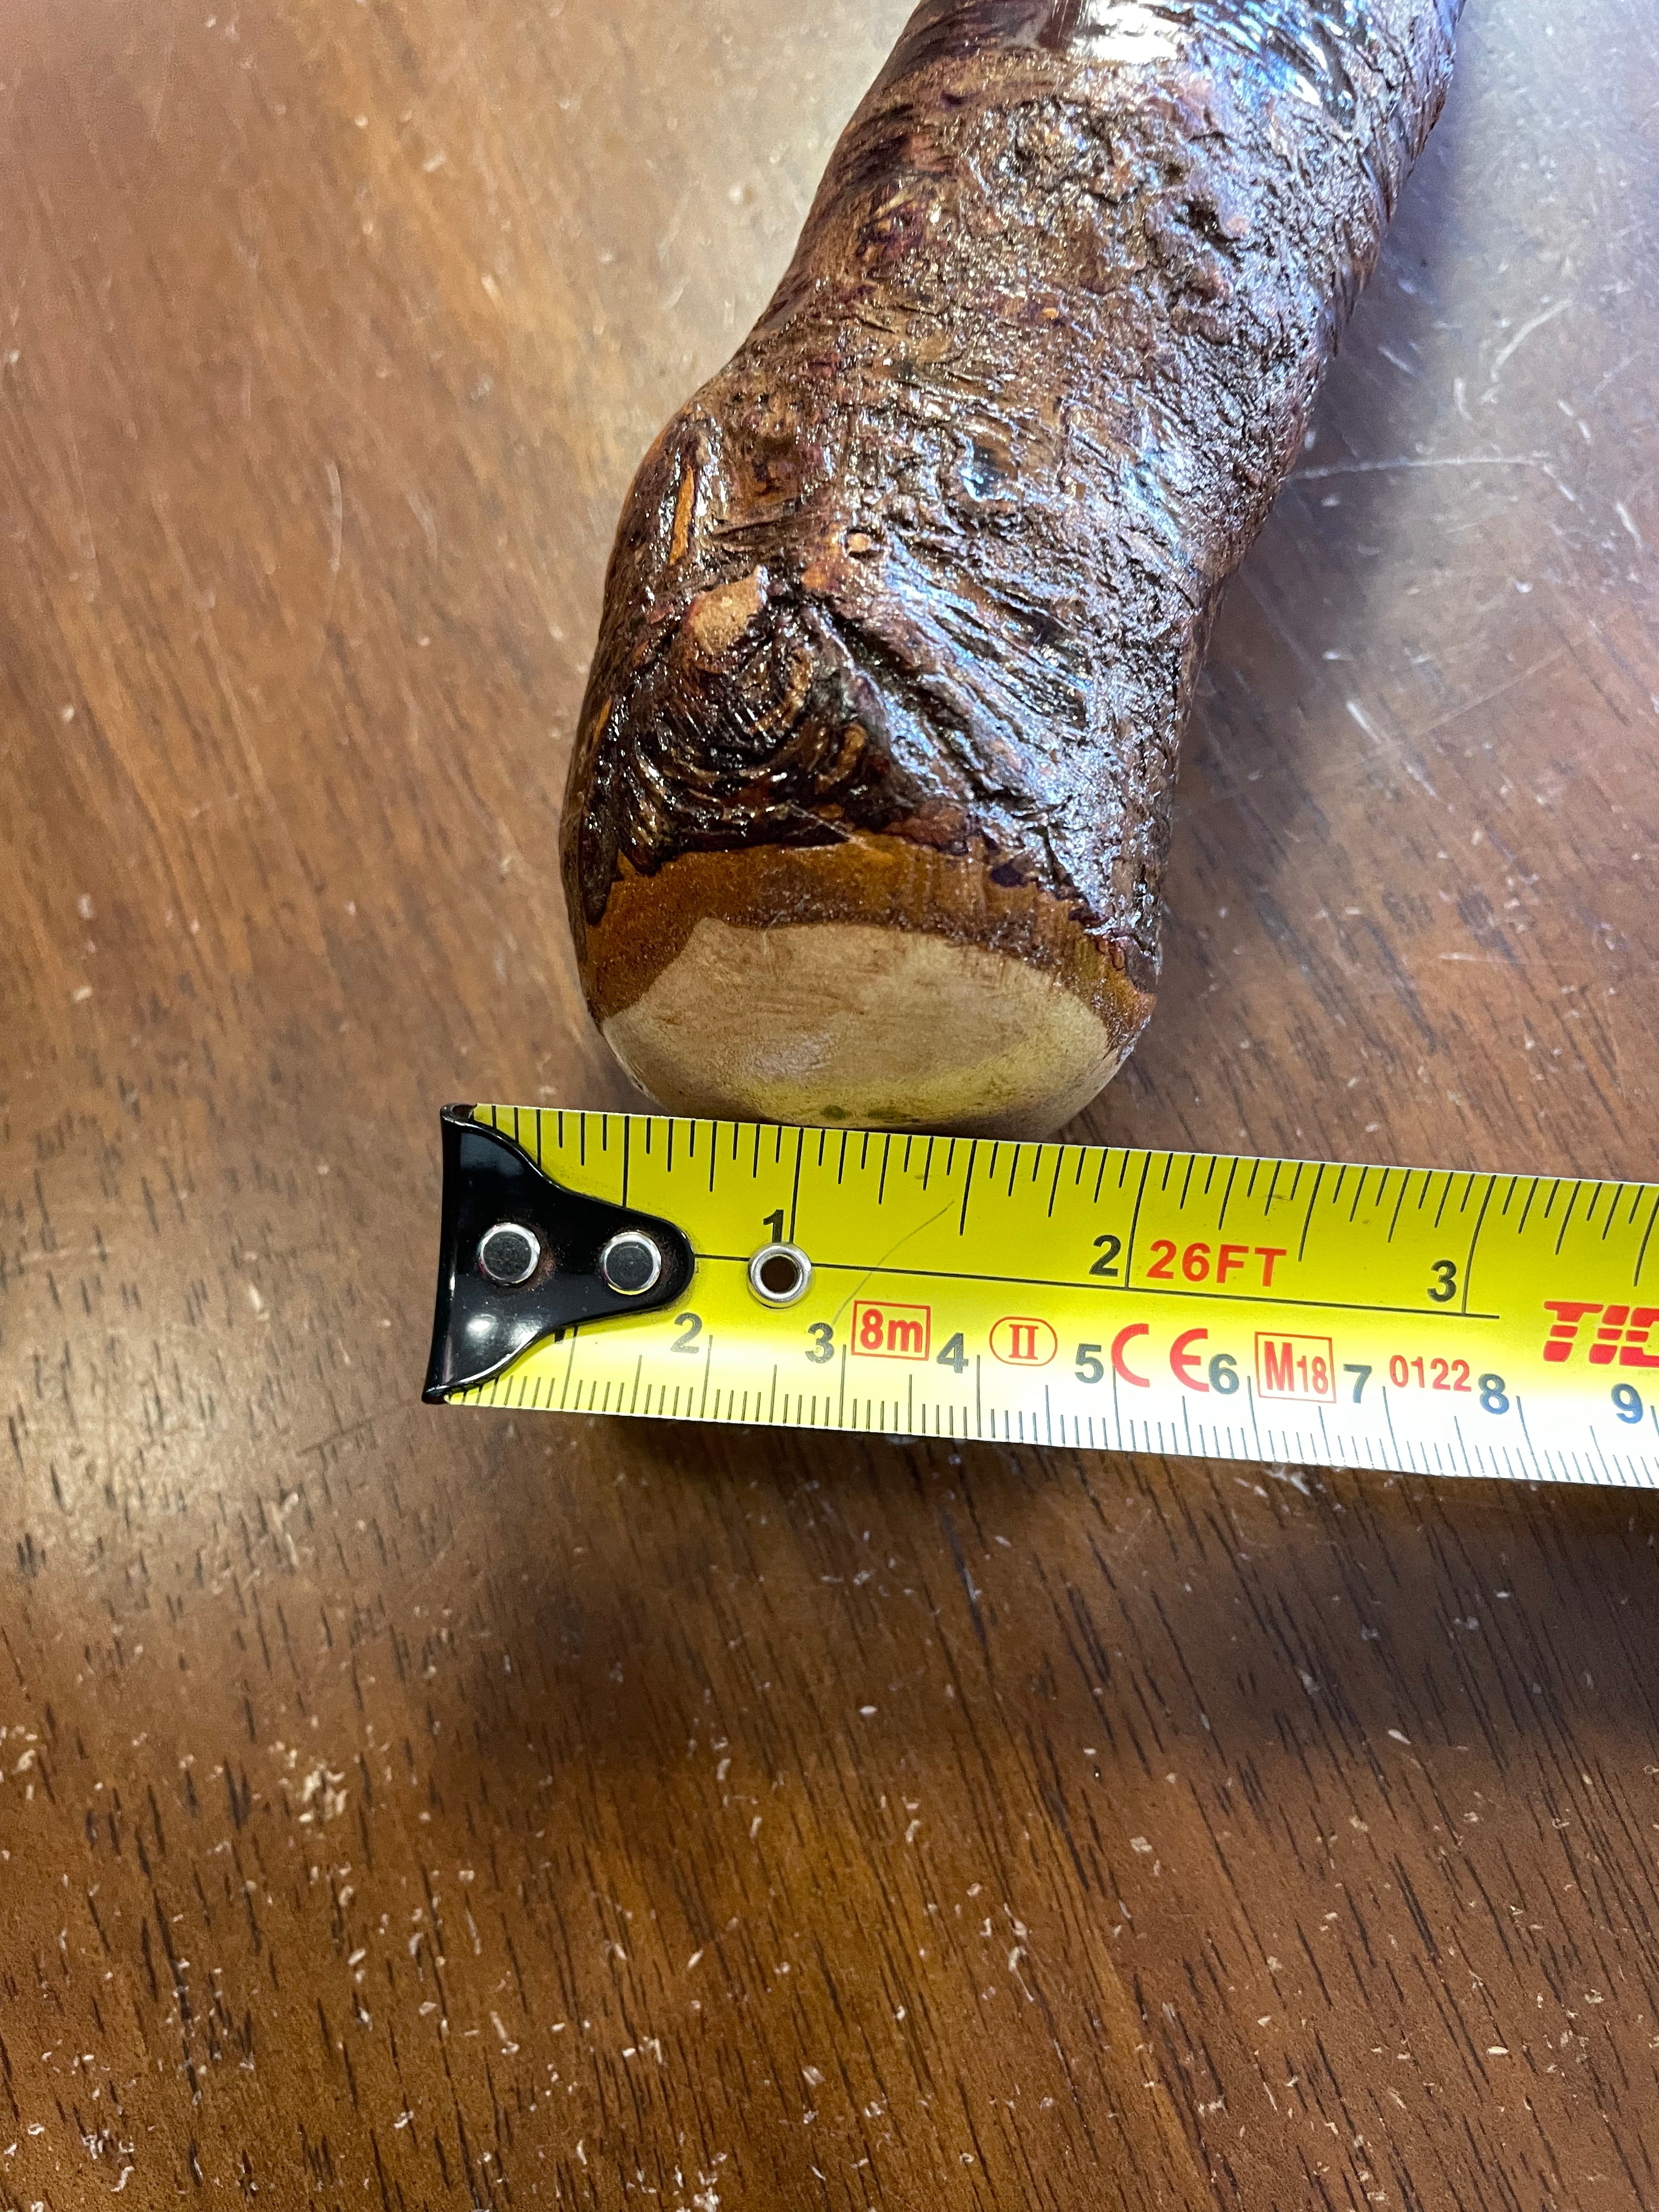 Blackthorn Shillelagh - 31 inch - Handmade in Ireland